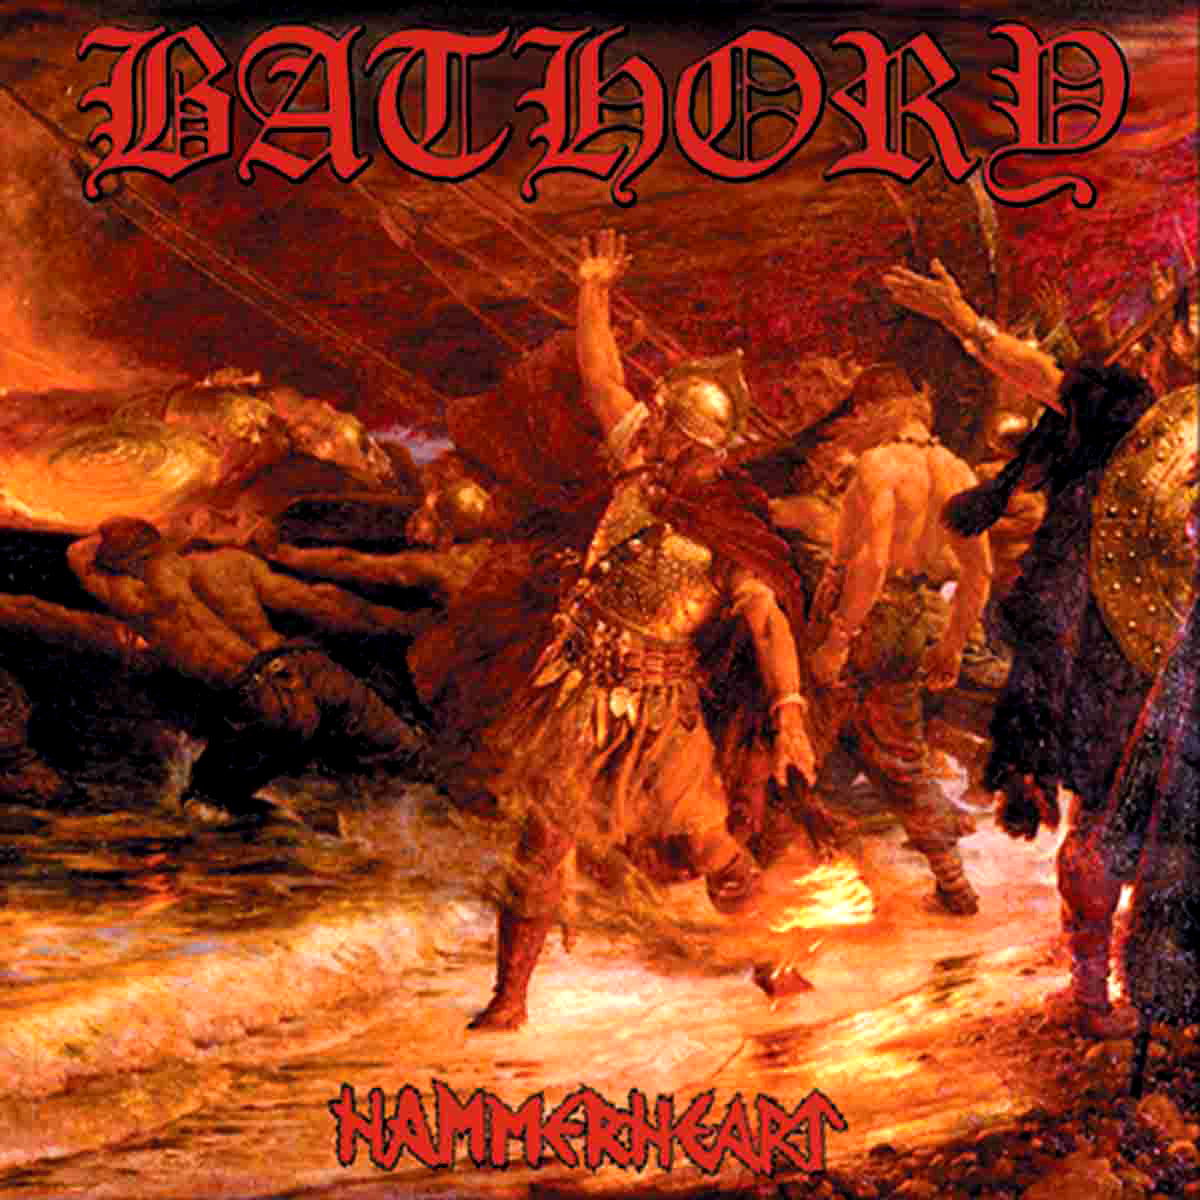 Bathory - Hammerheart double LP